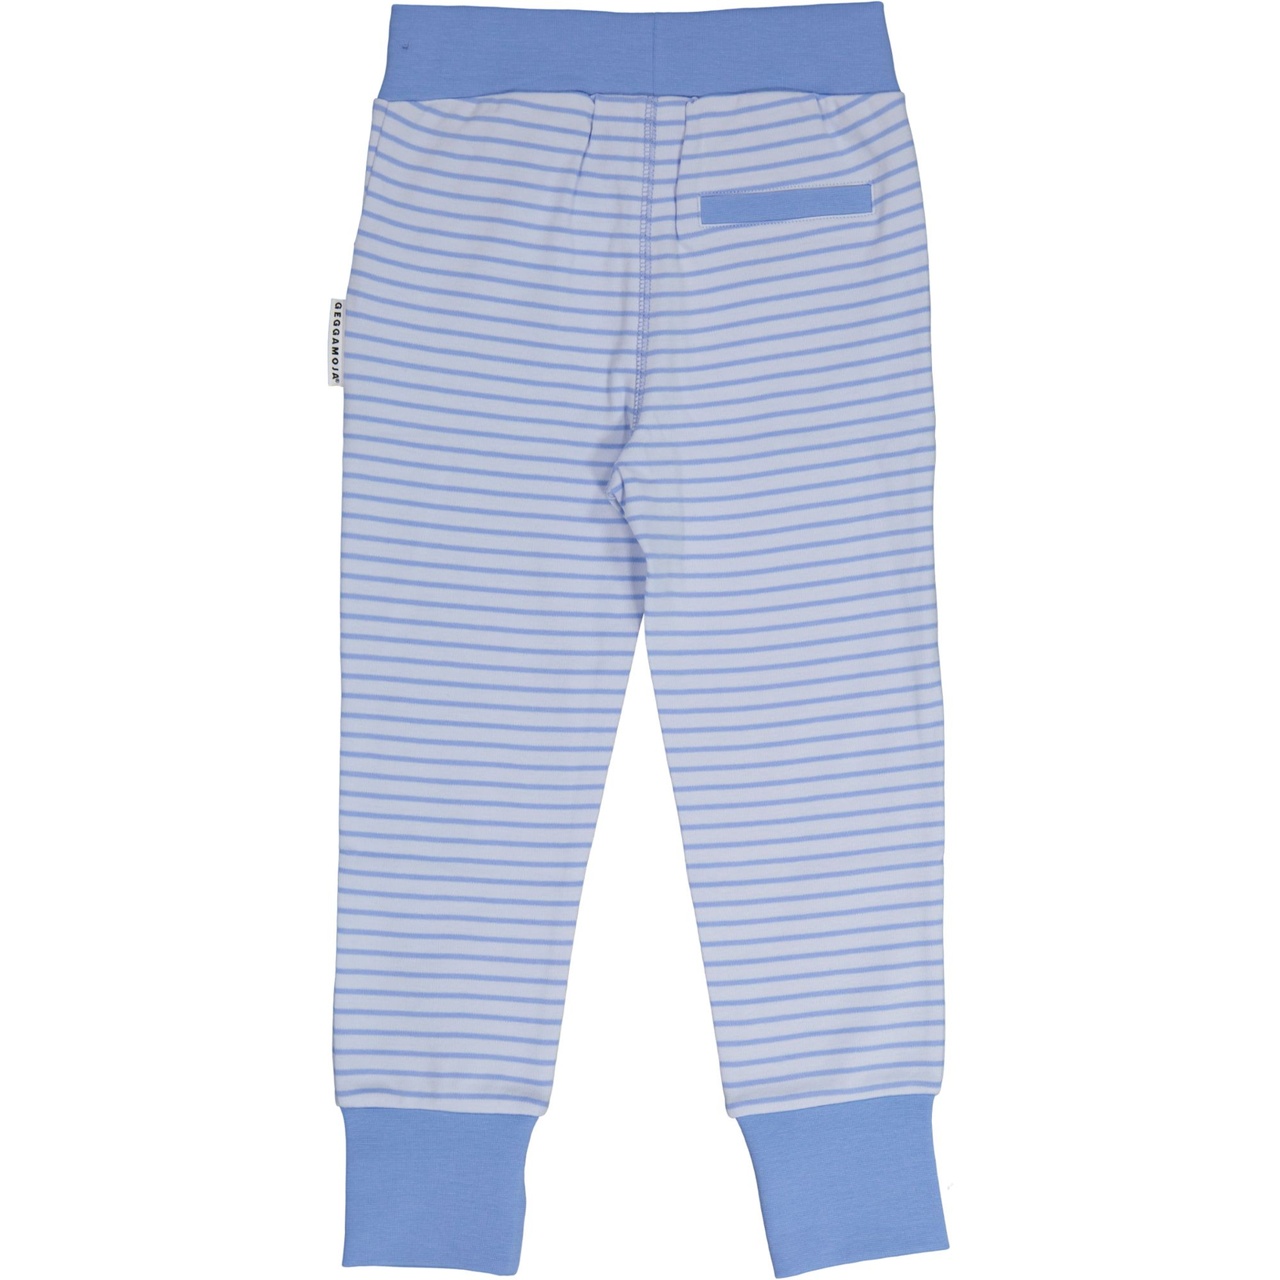 Long pants Light blue/blue